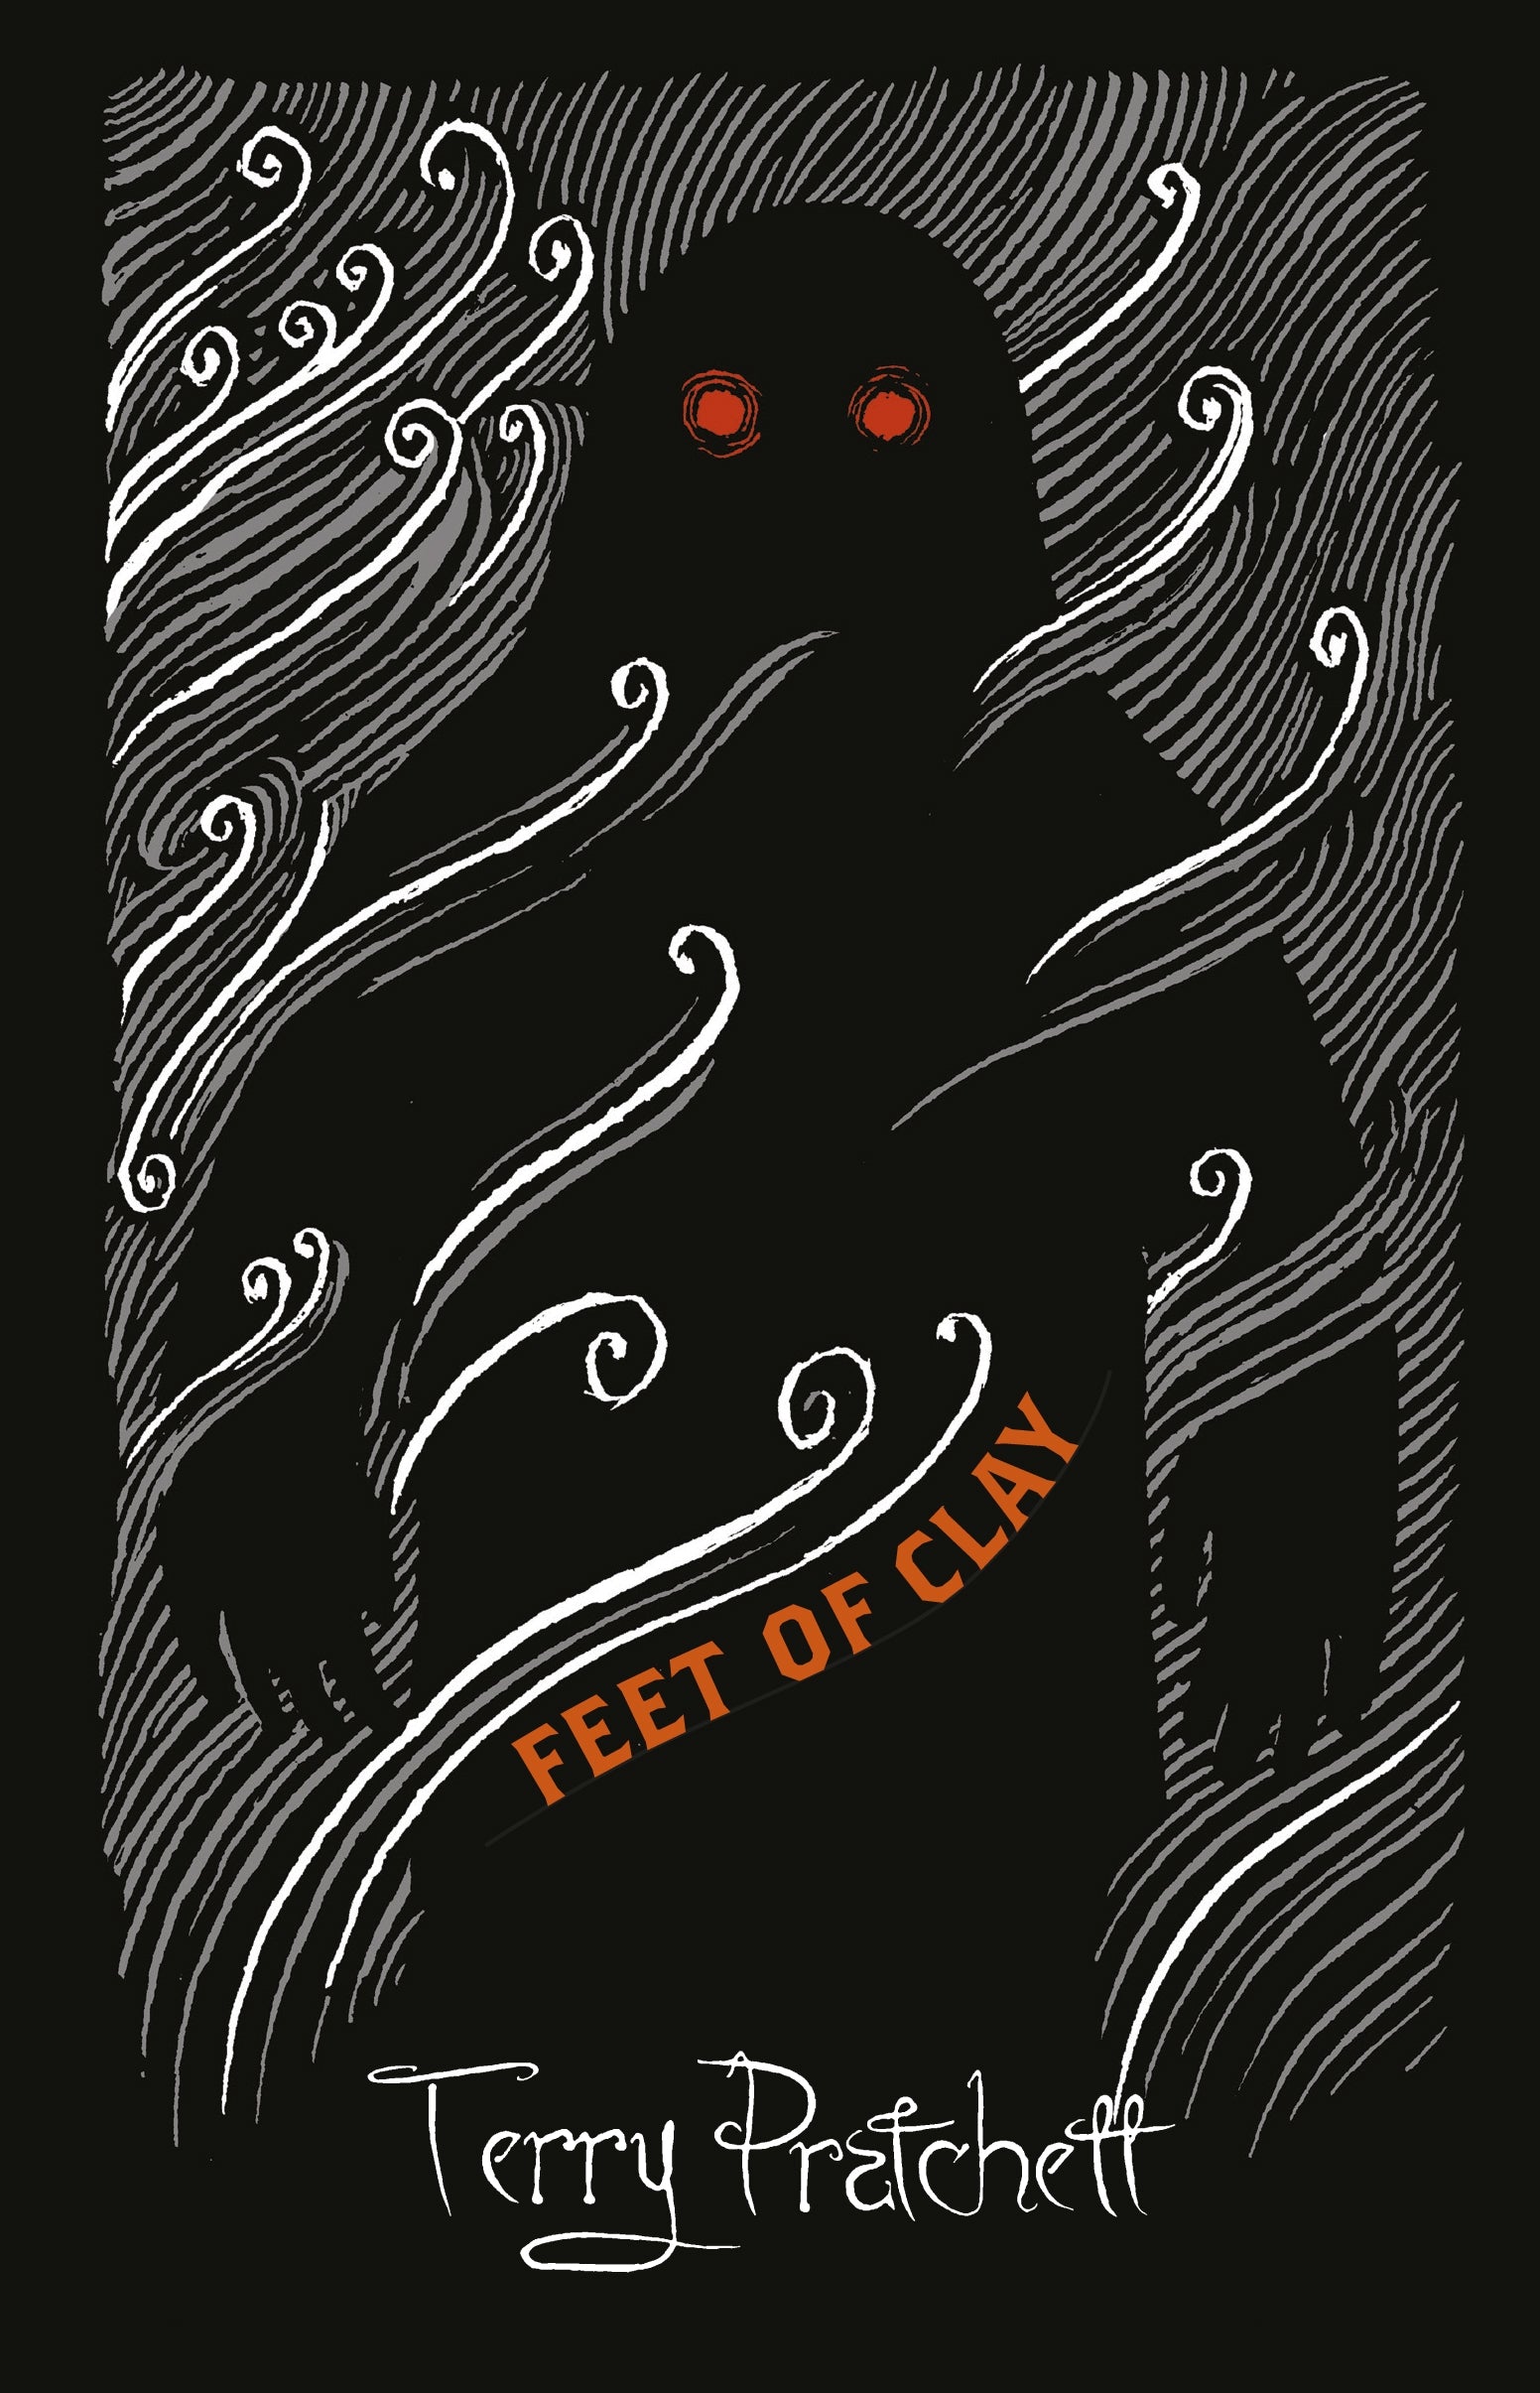 Feet Of Clay by Terry Pratchett